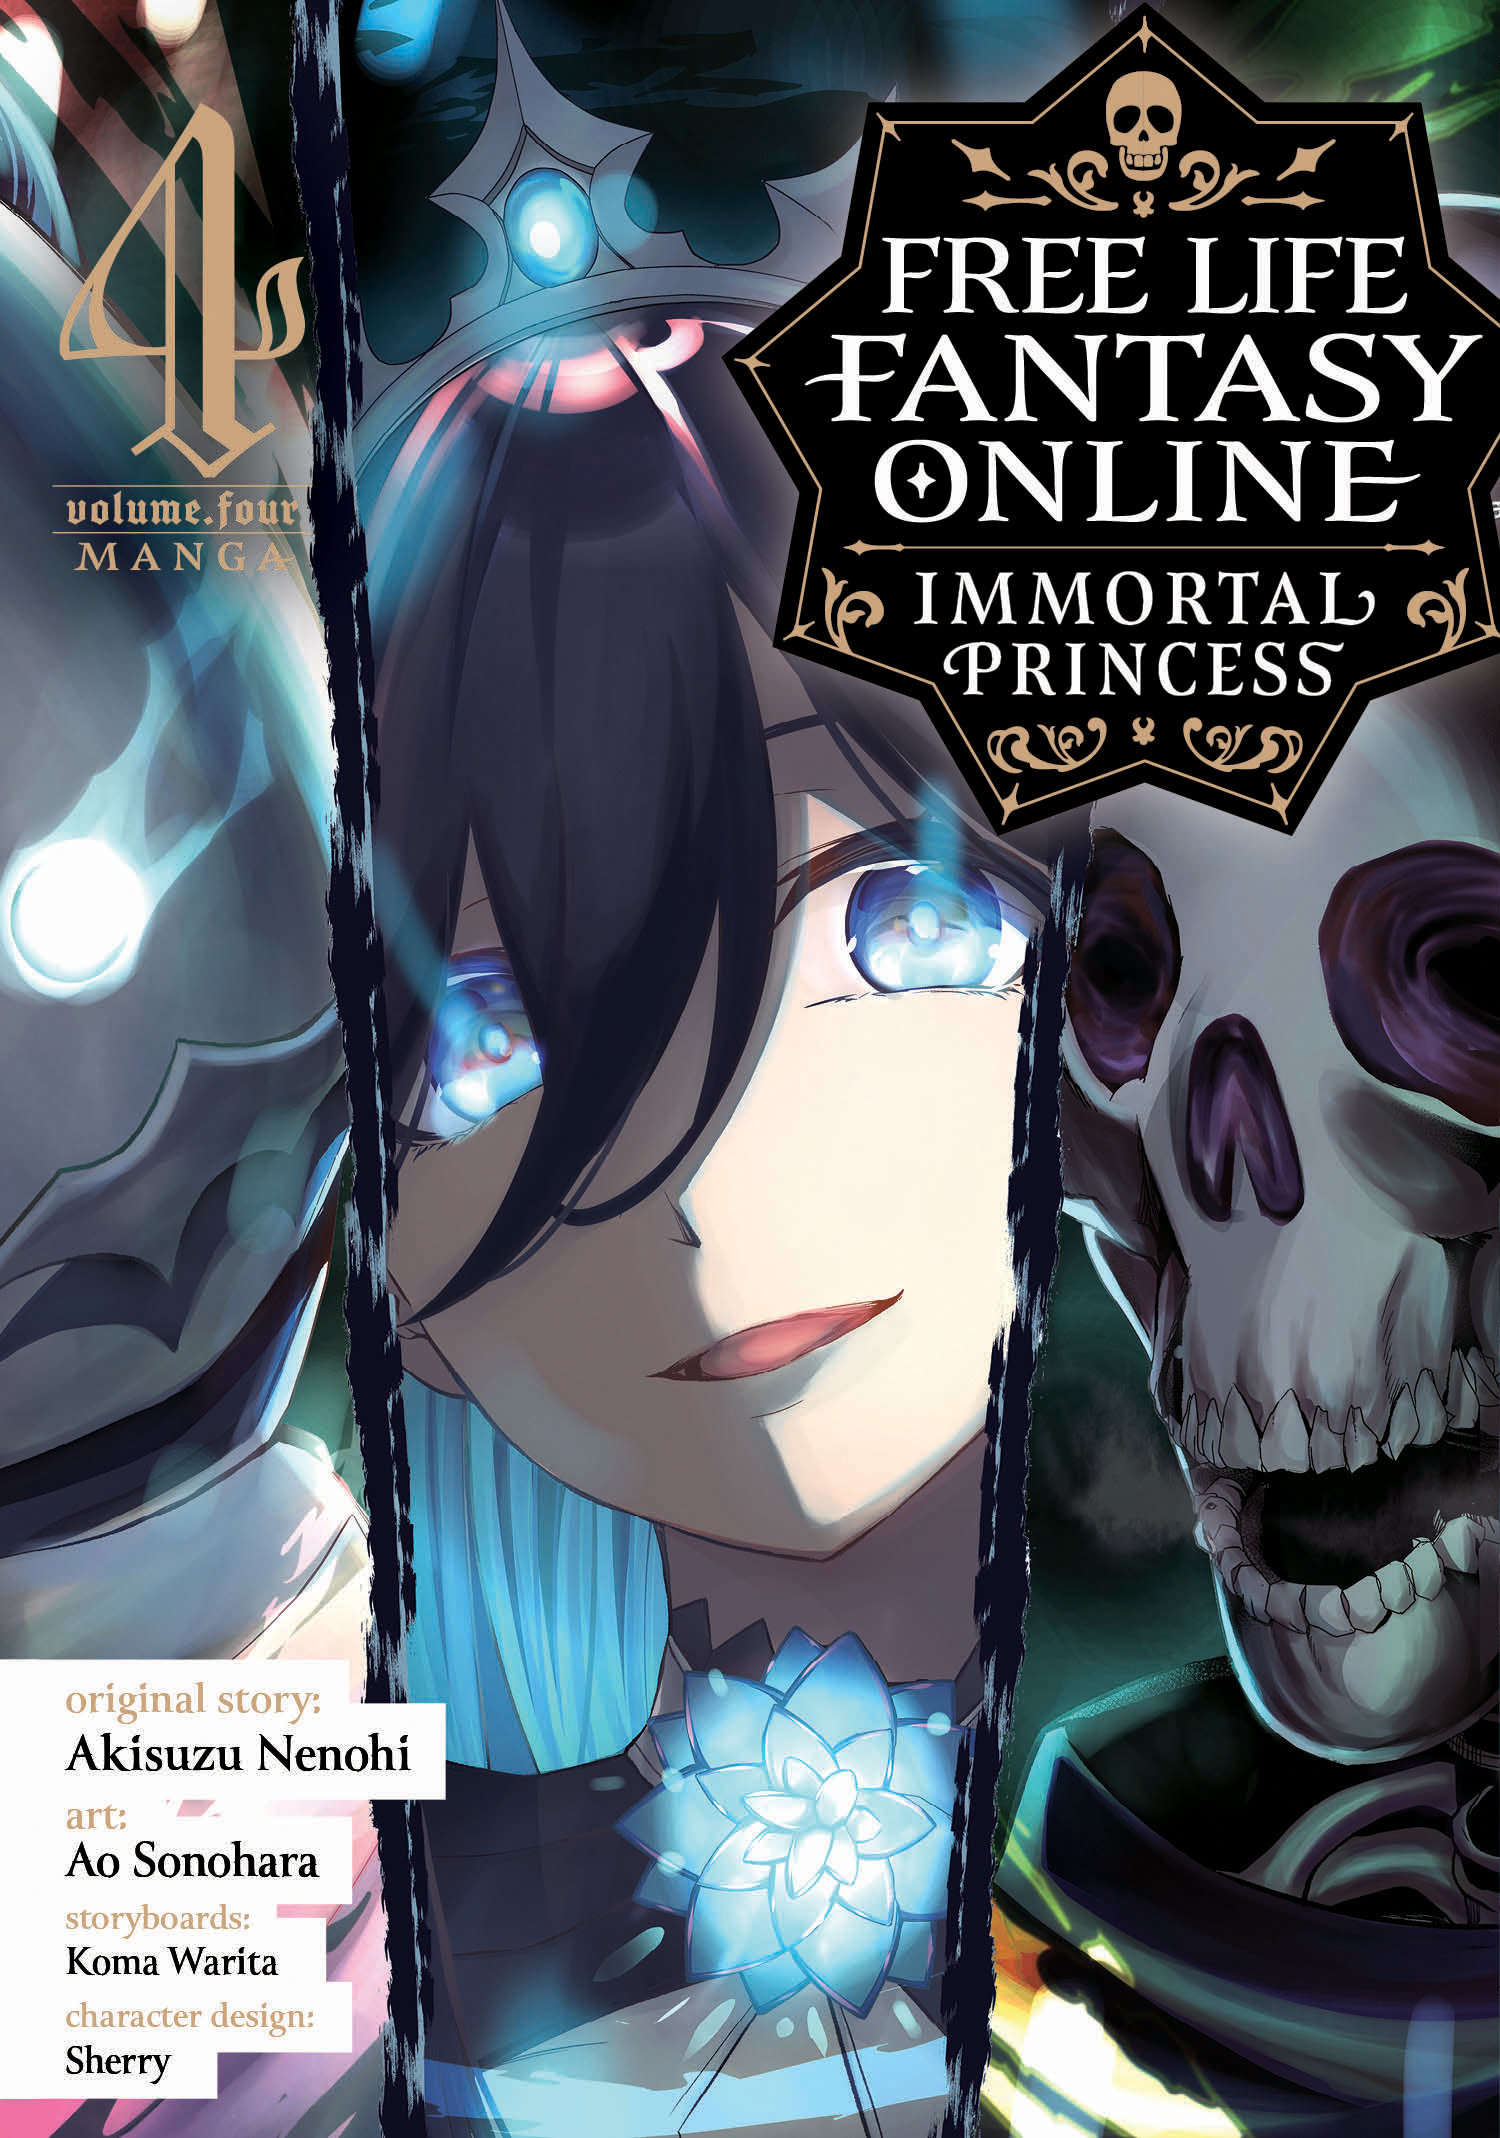 Free Life Fantasy Online Immortal Princess Manga Volume 4